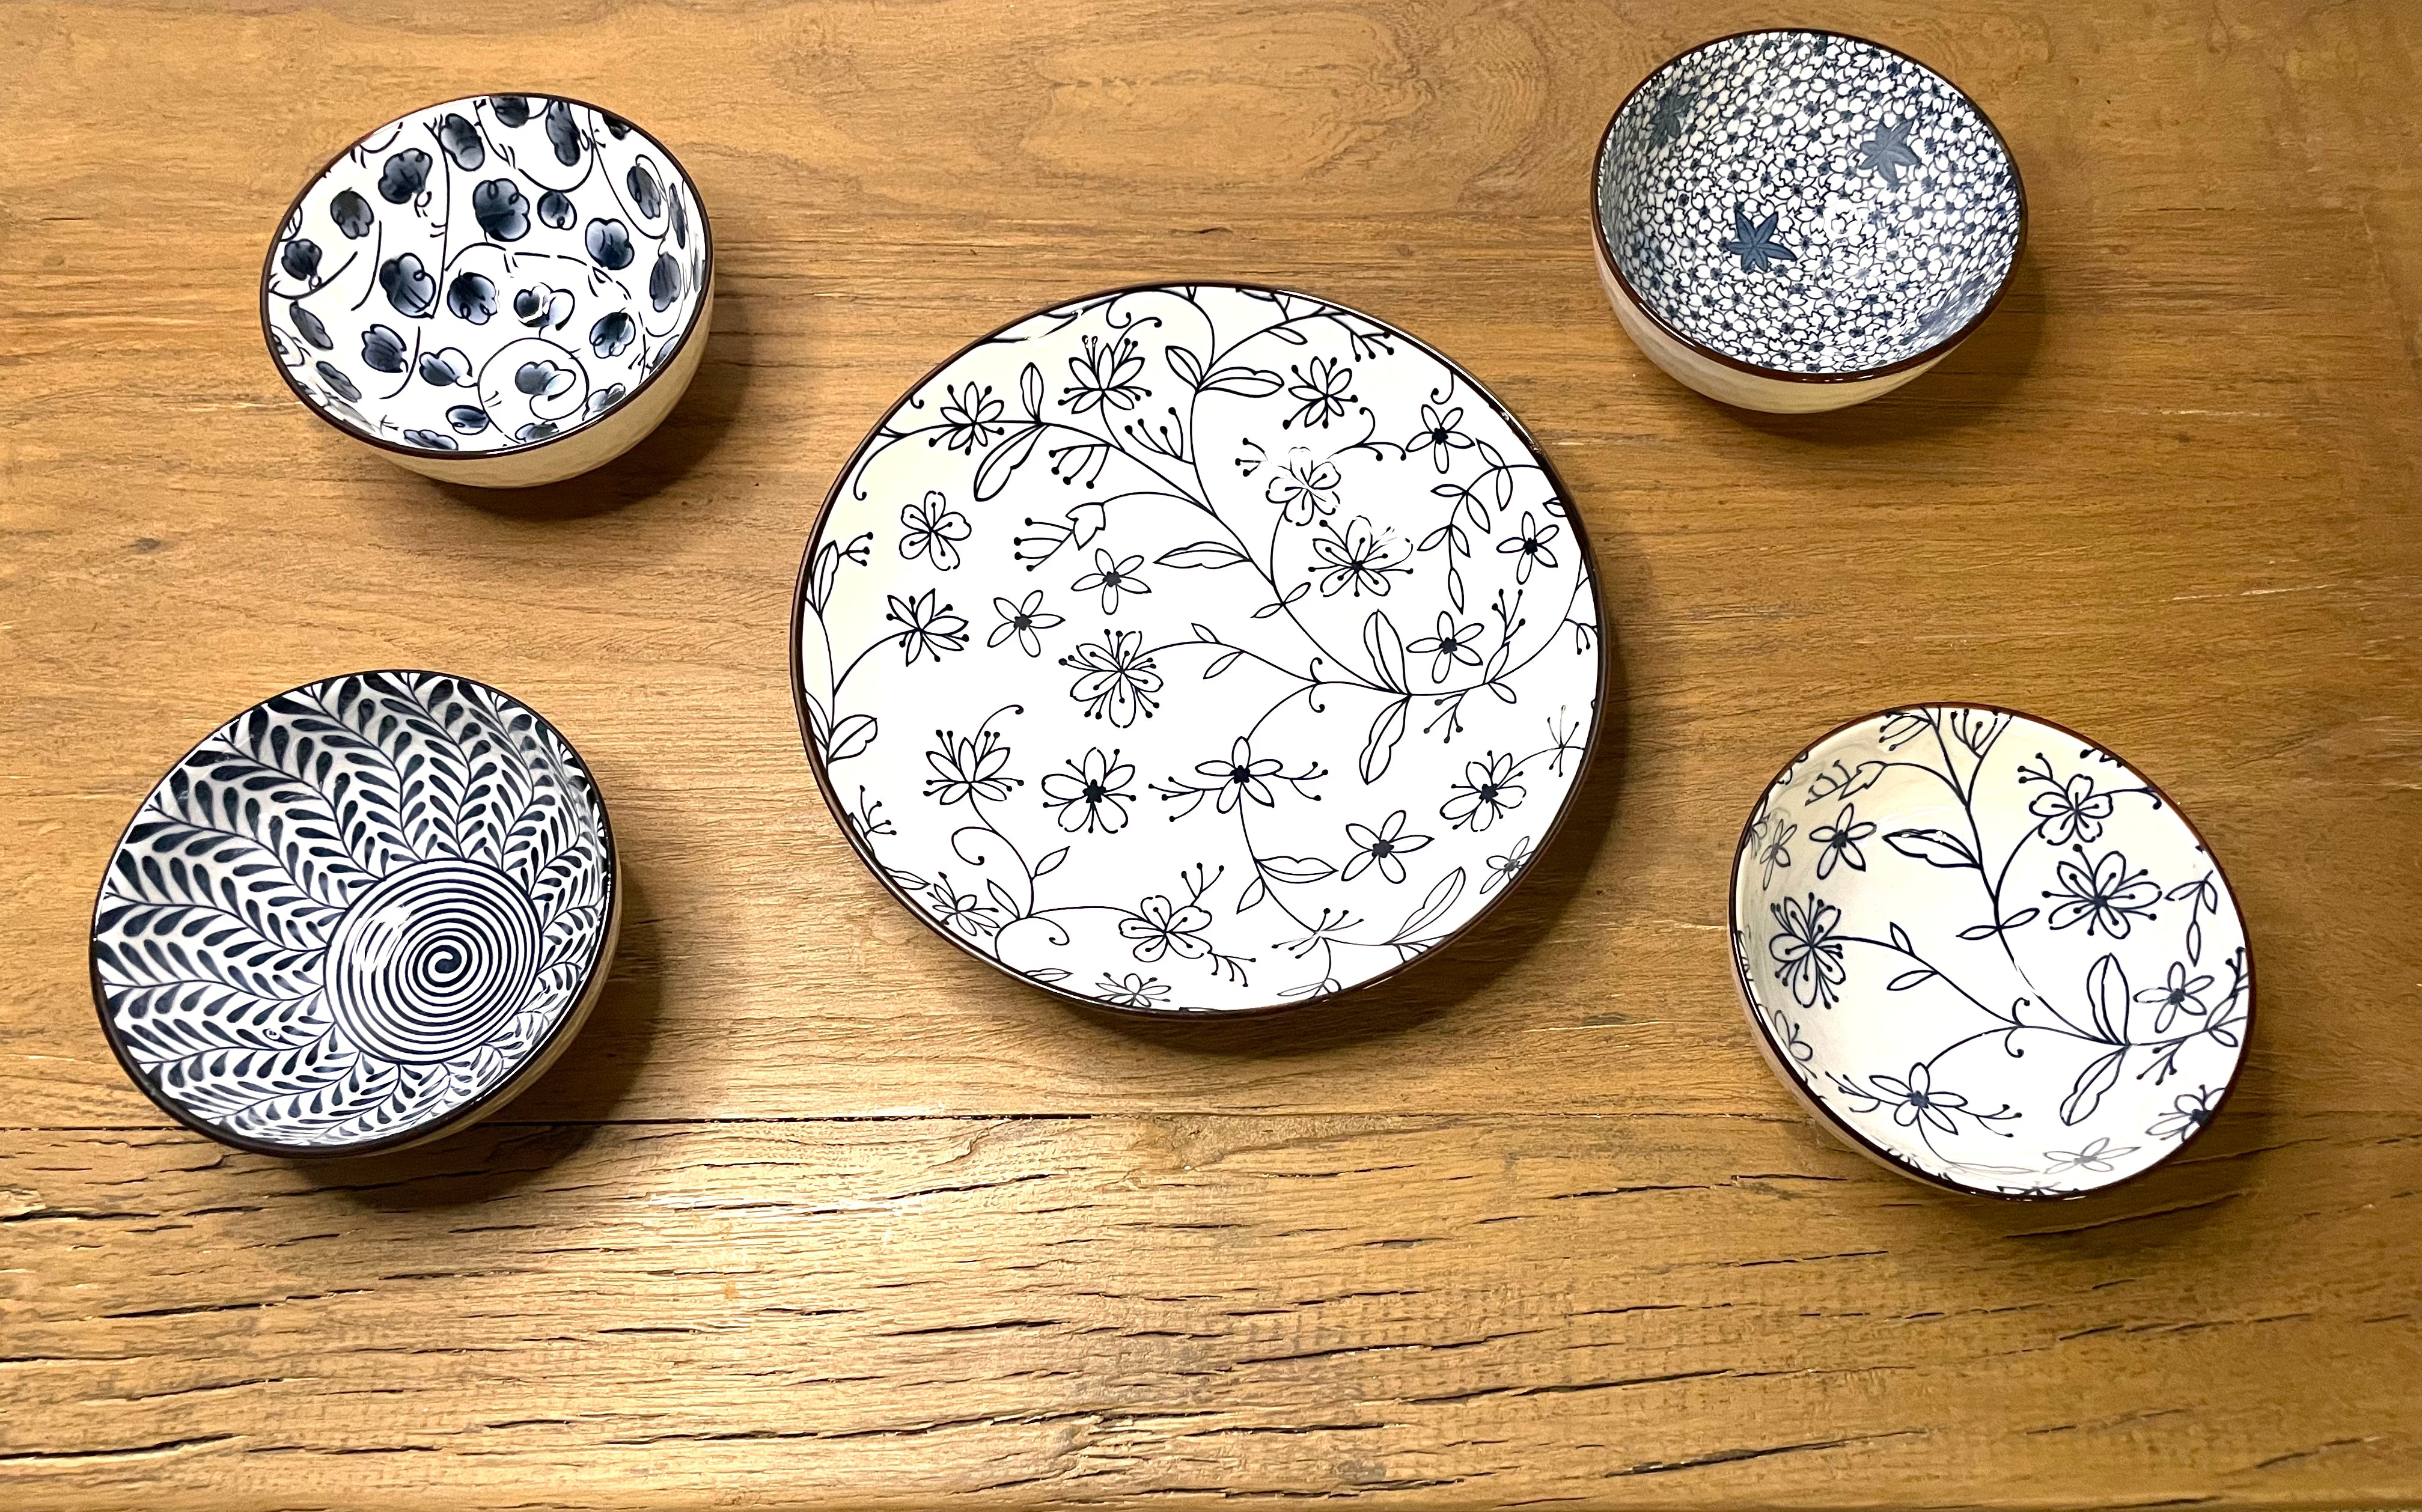 Ceramic Japanese Soup bowls Rice bowls Noodle Bowls Poke Bowls decorative / GIFT SET